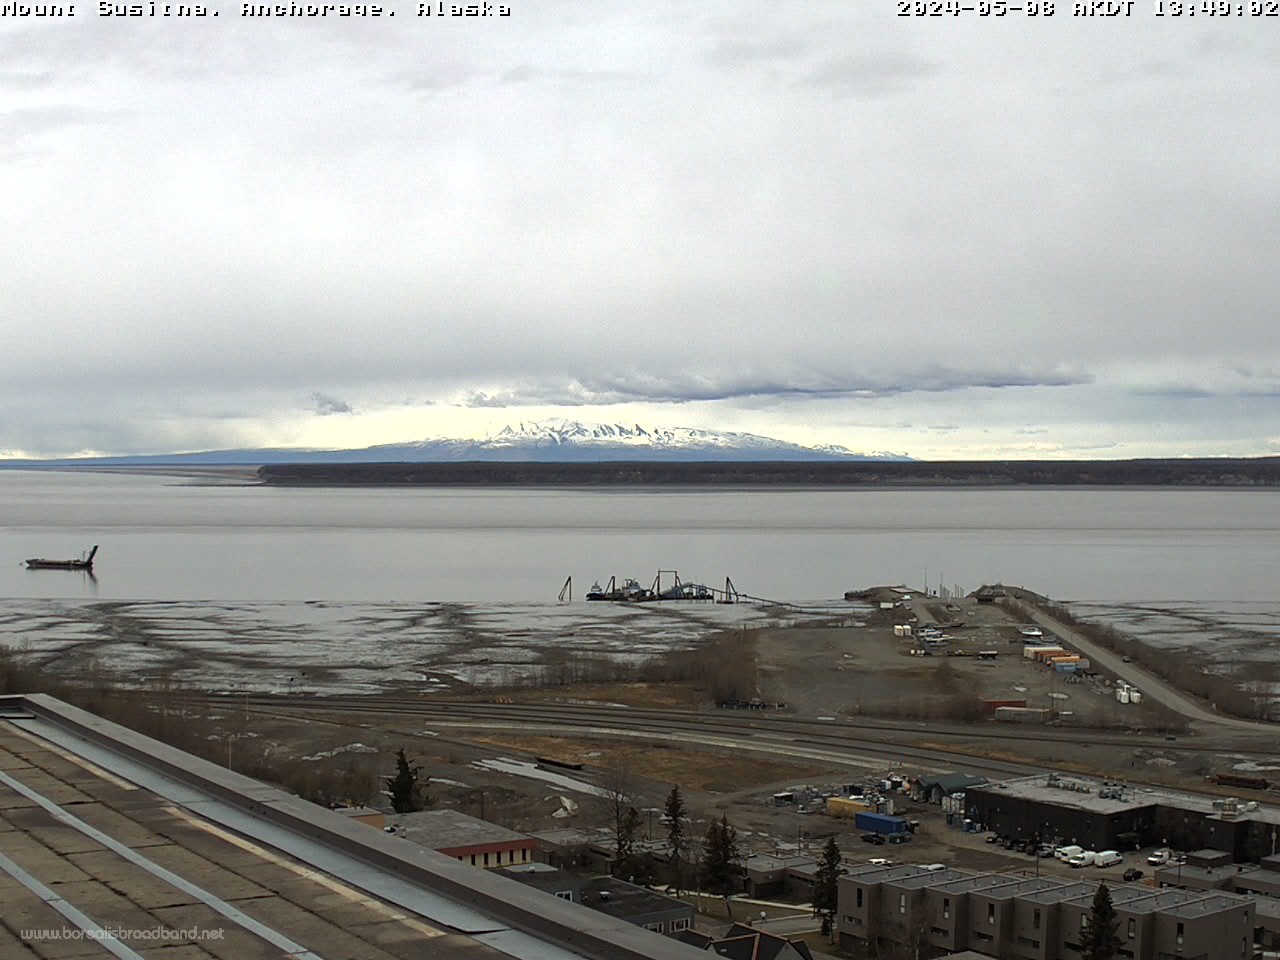 Mount Susitna, Alaska Do. 13:49